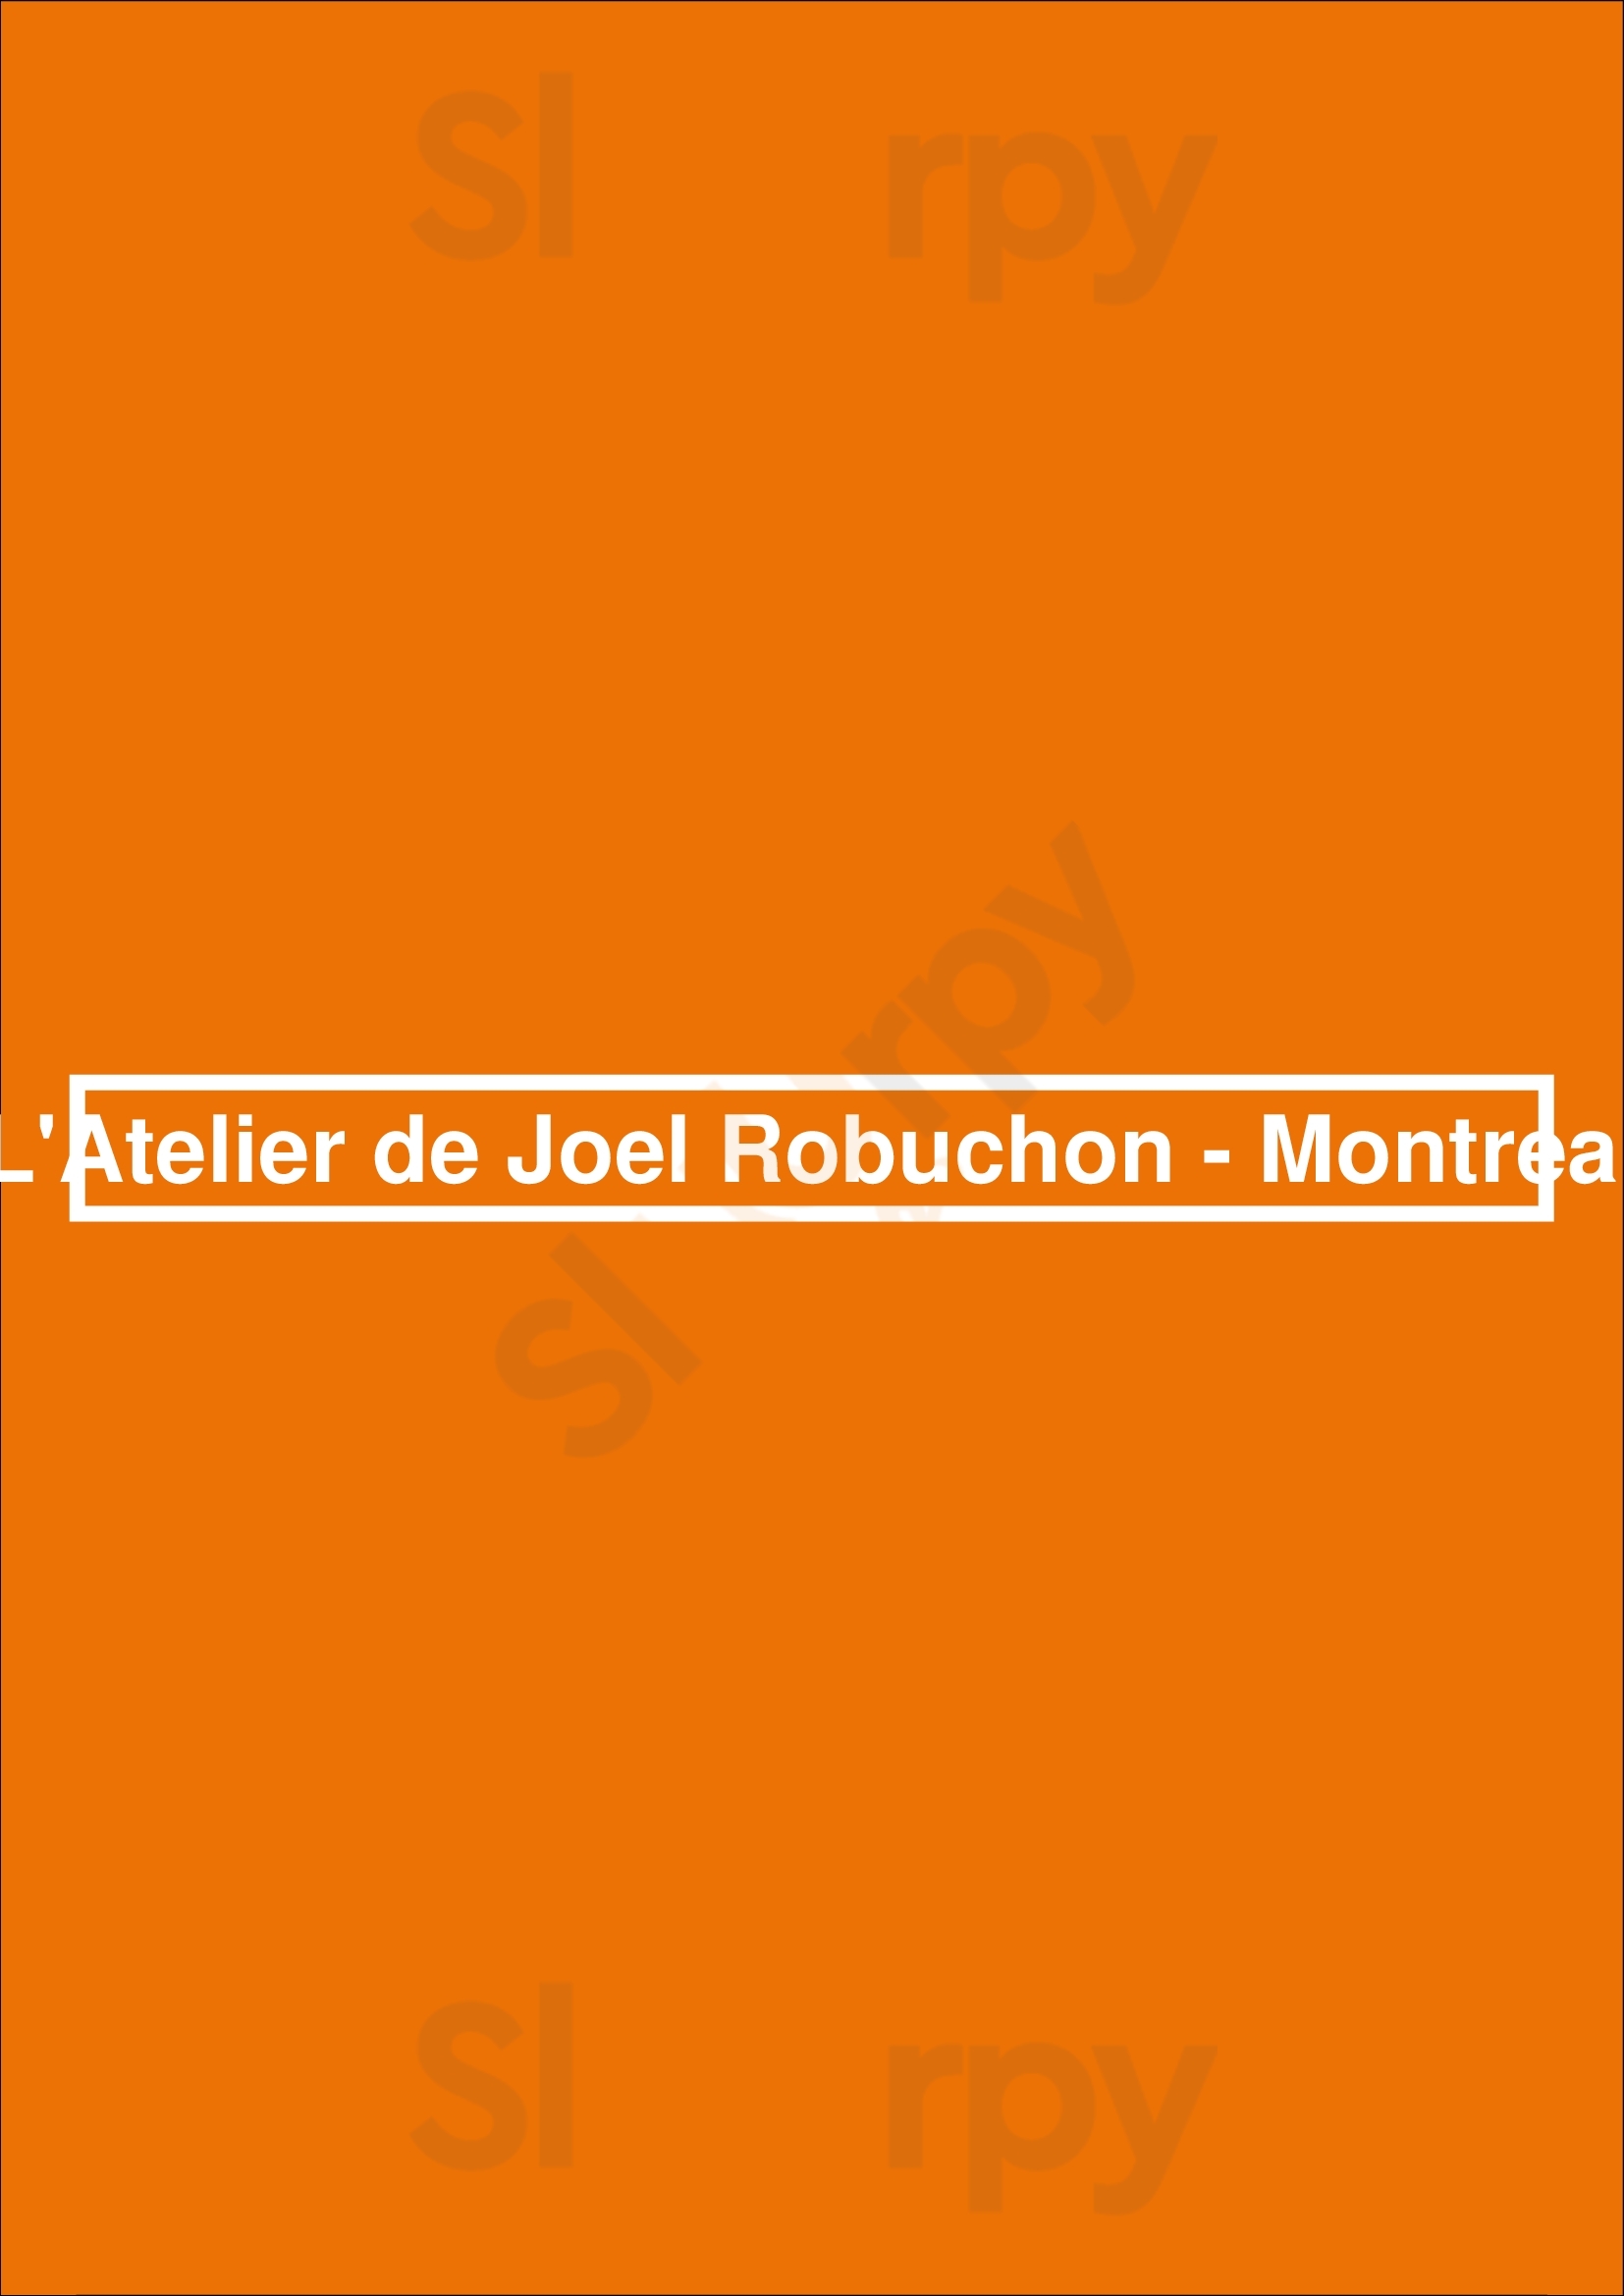 L'atelier De Joel Robuchon - Montreal Montreal Menu - 1